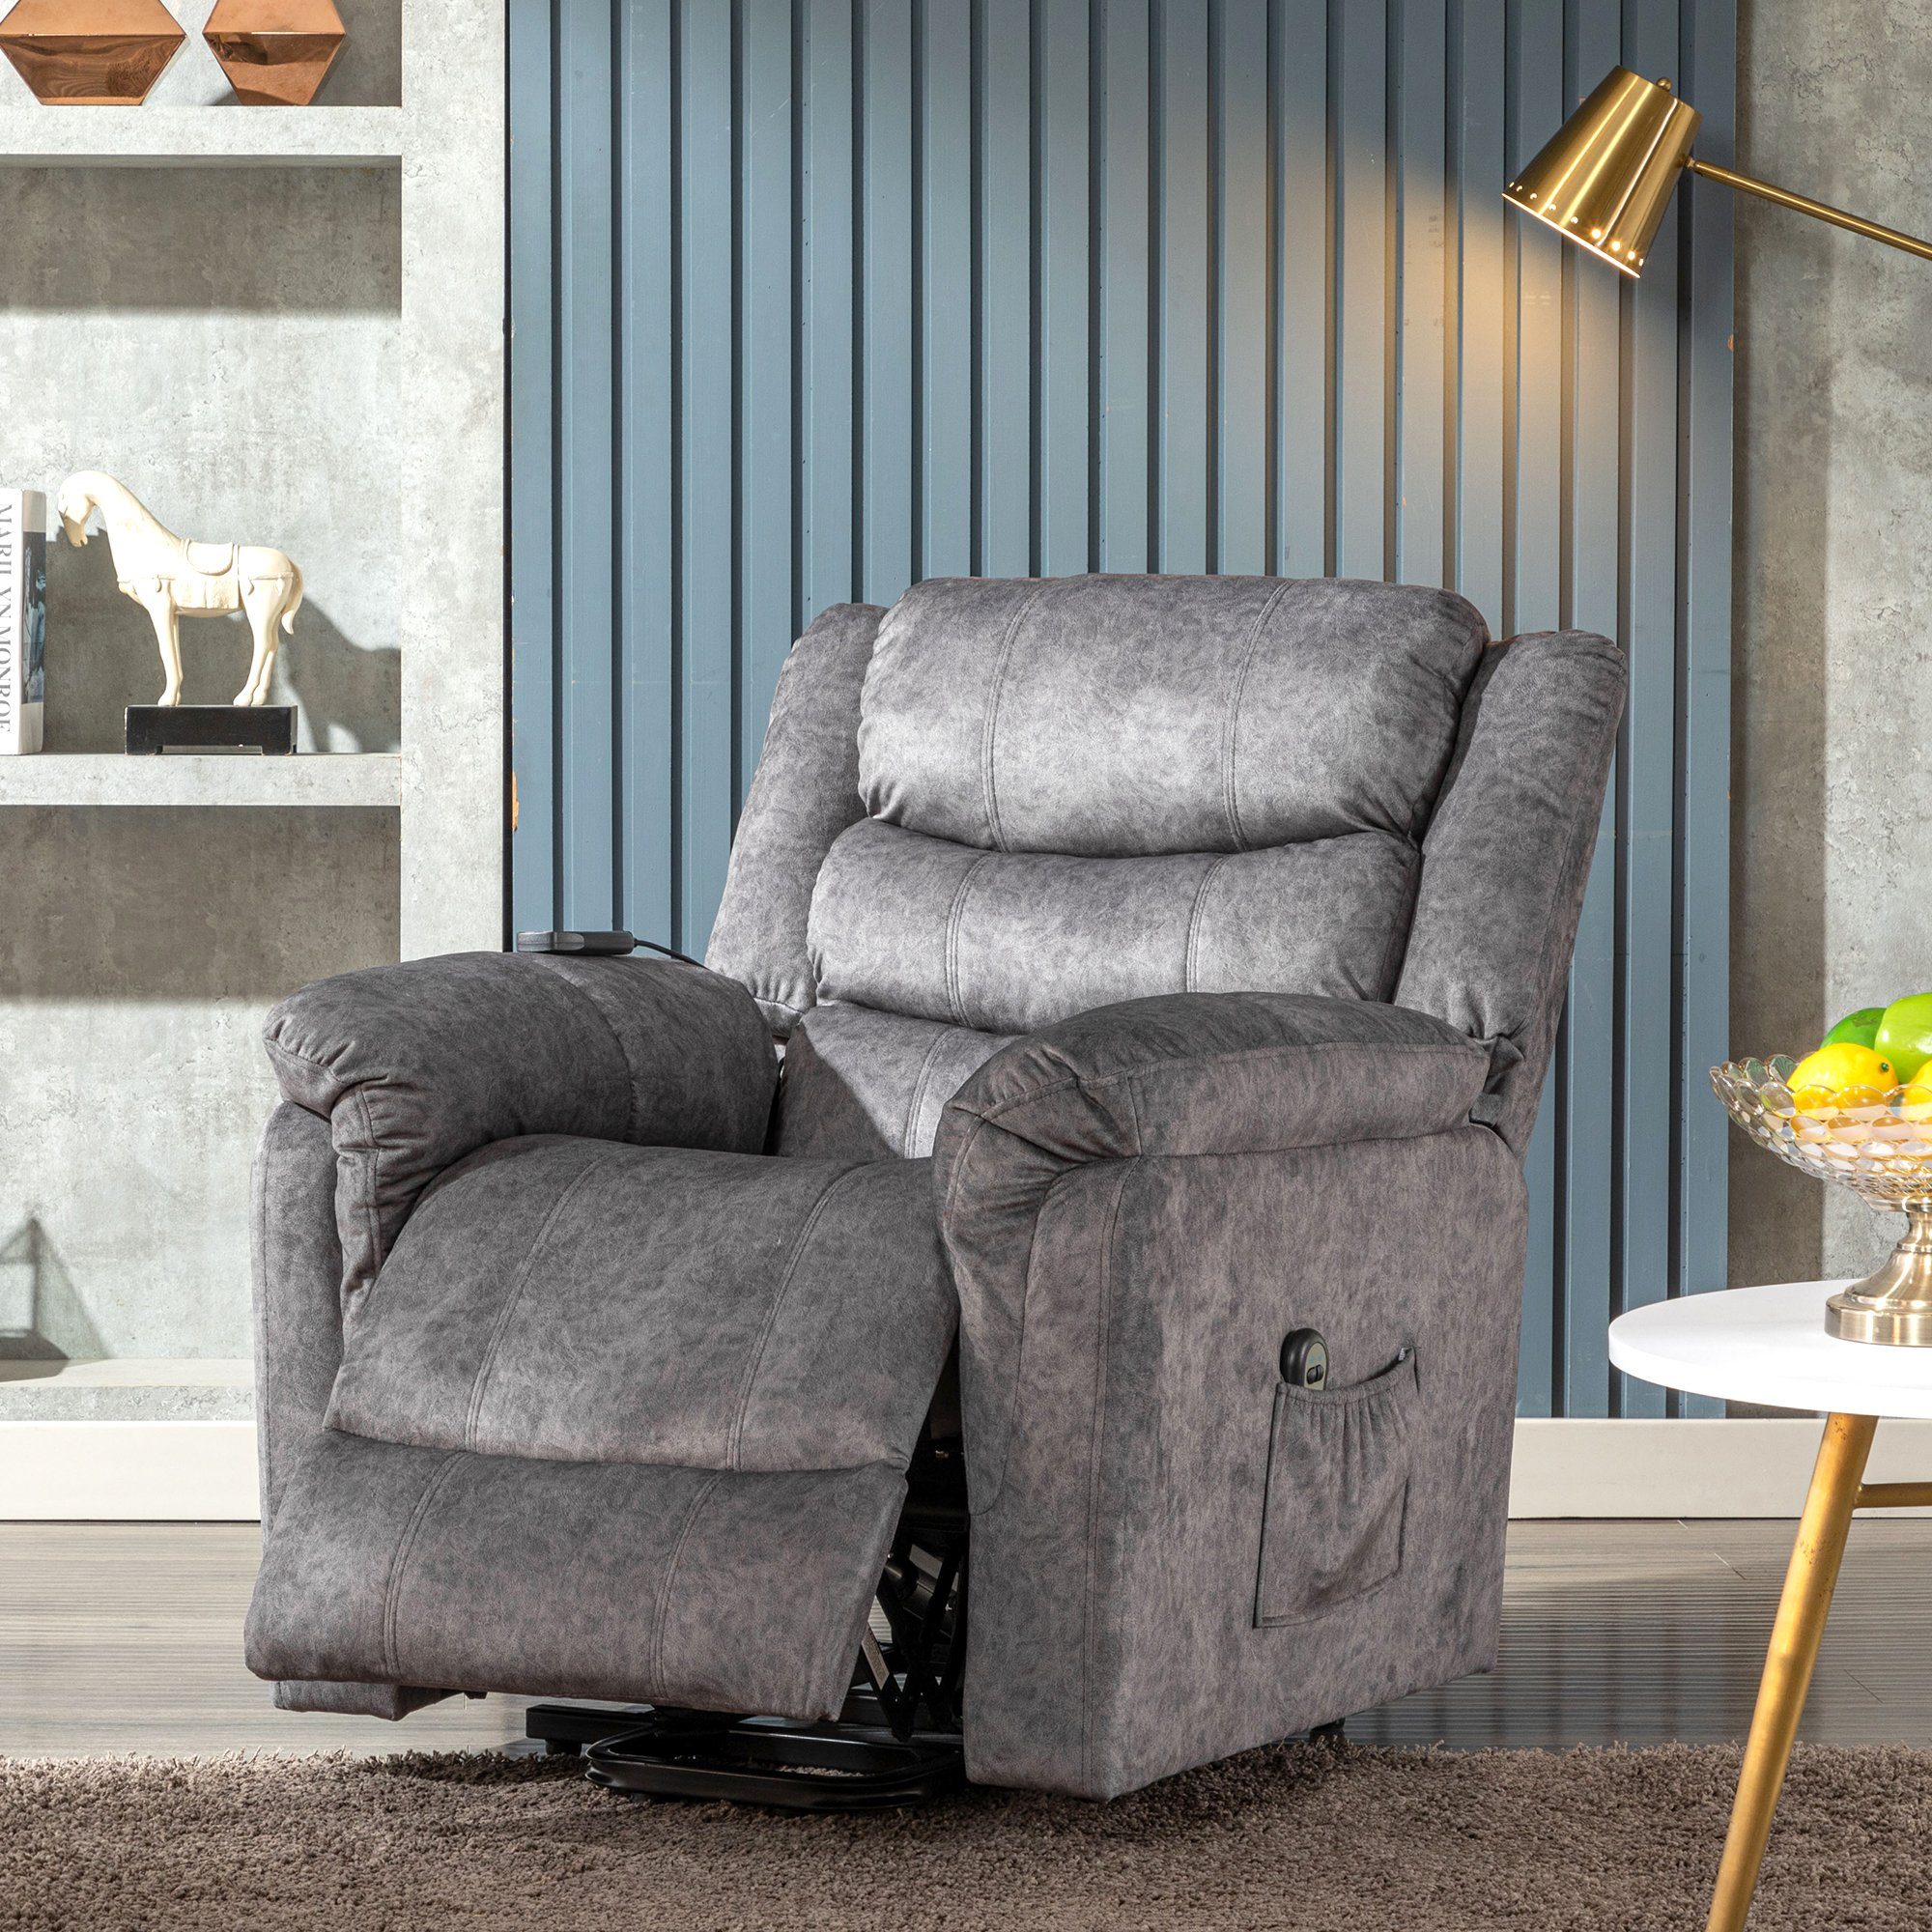 Ulife TV-Sessel Relaxsessel Massagesesel Aufstehhilfe, Wärme, elektrisch Grau